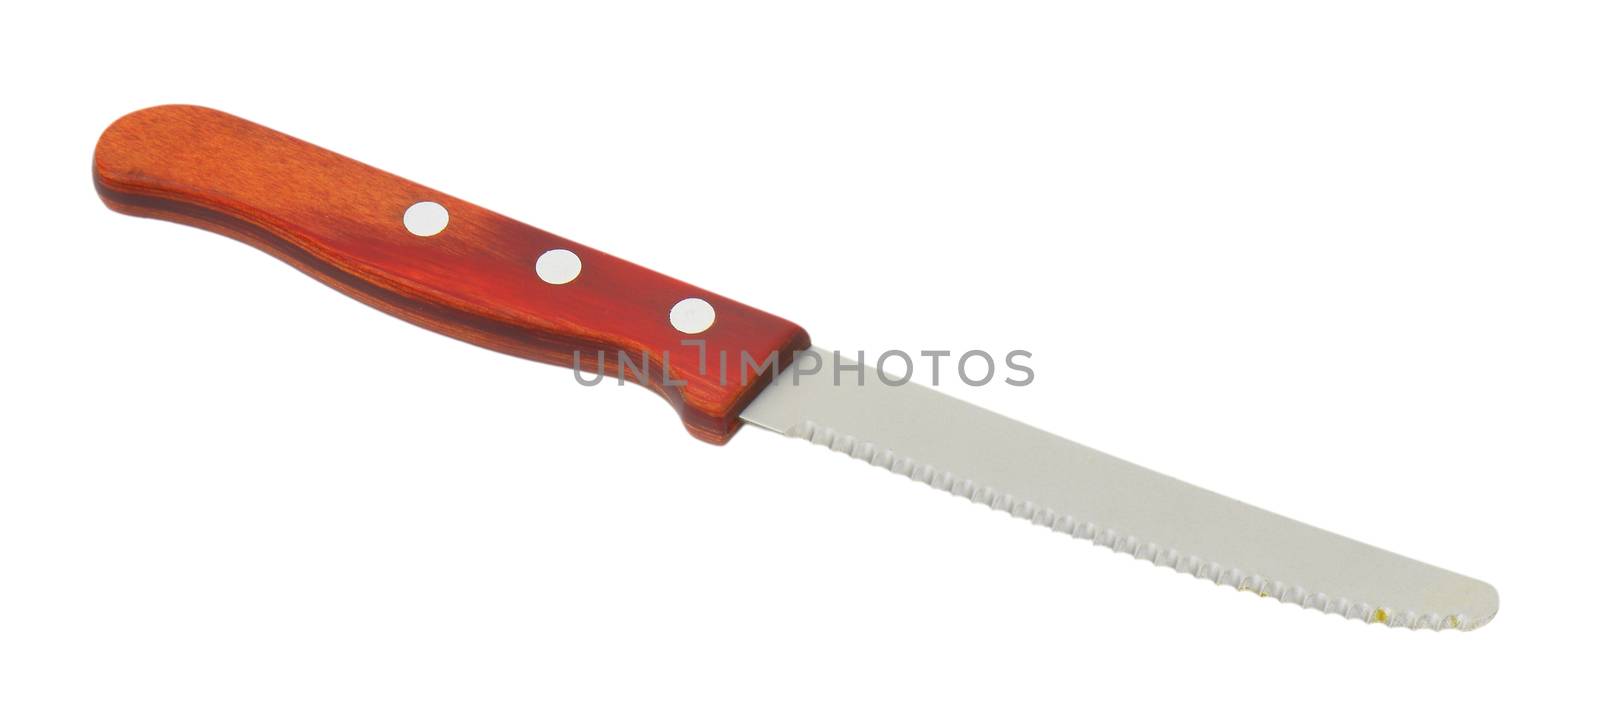 serrated kitchen knife by Digifoodstock